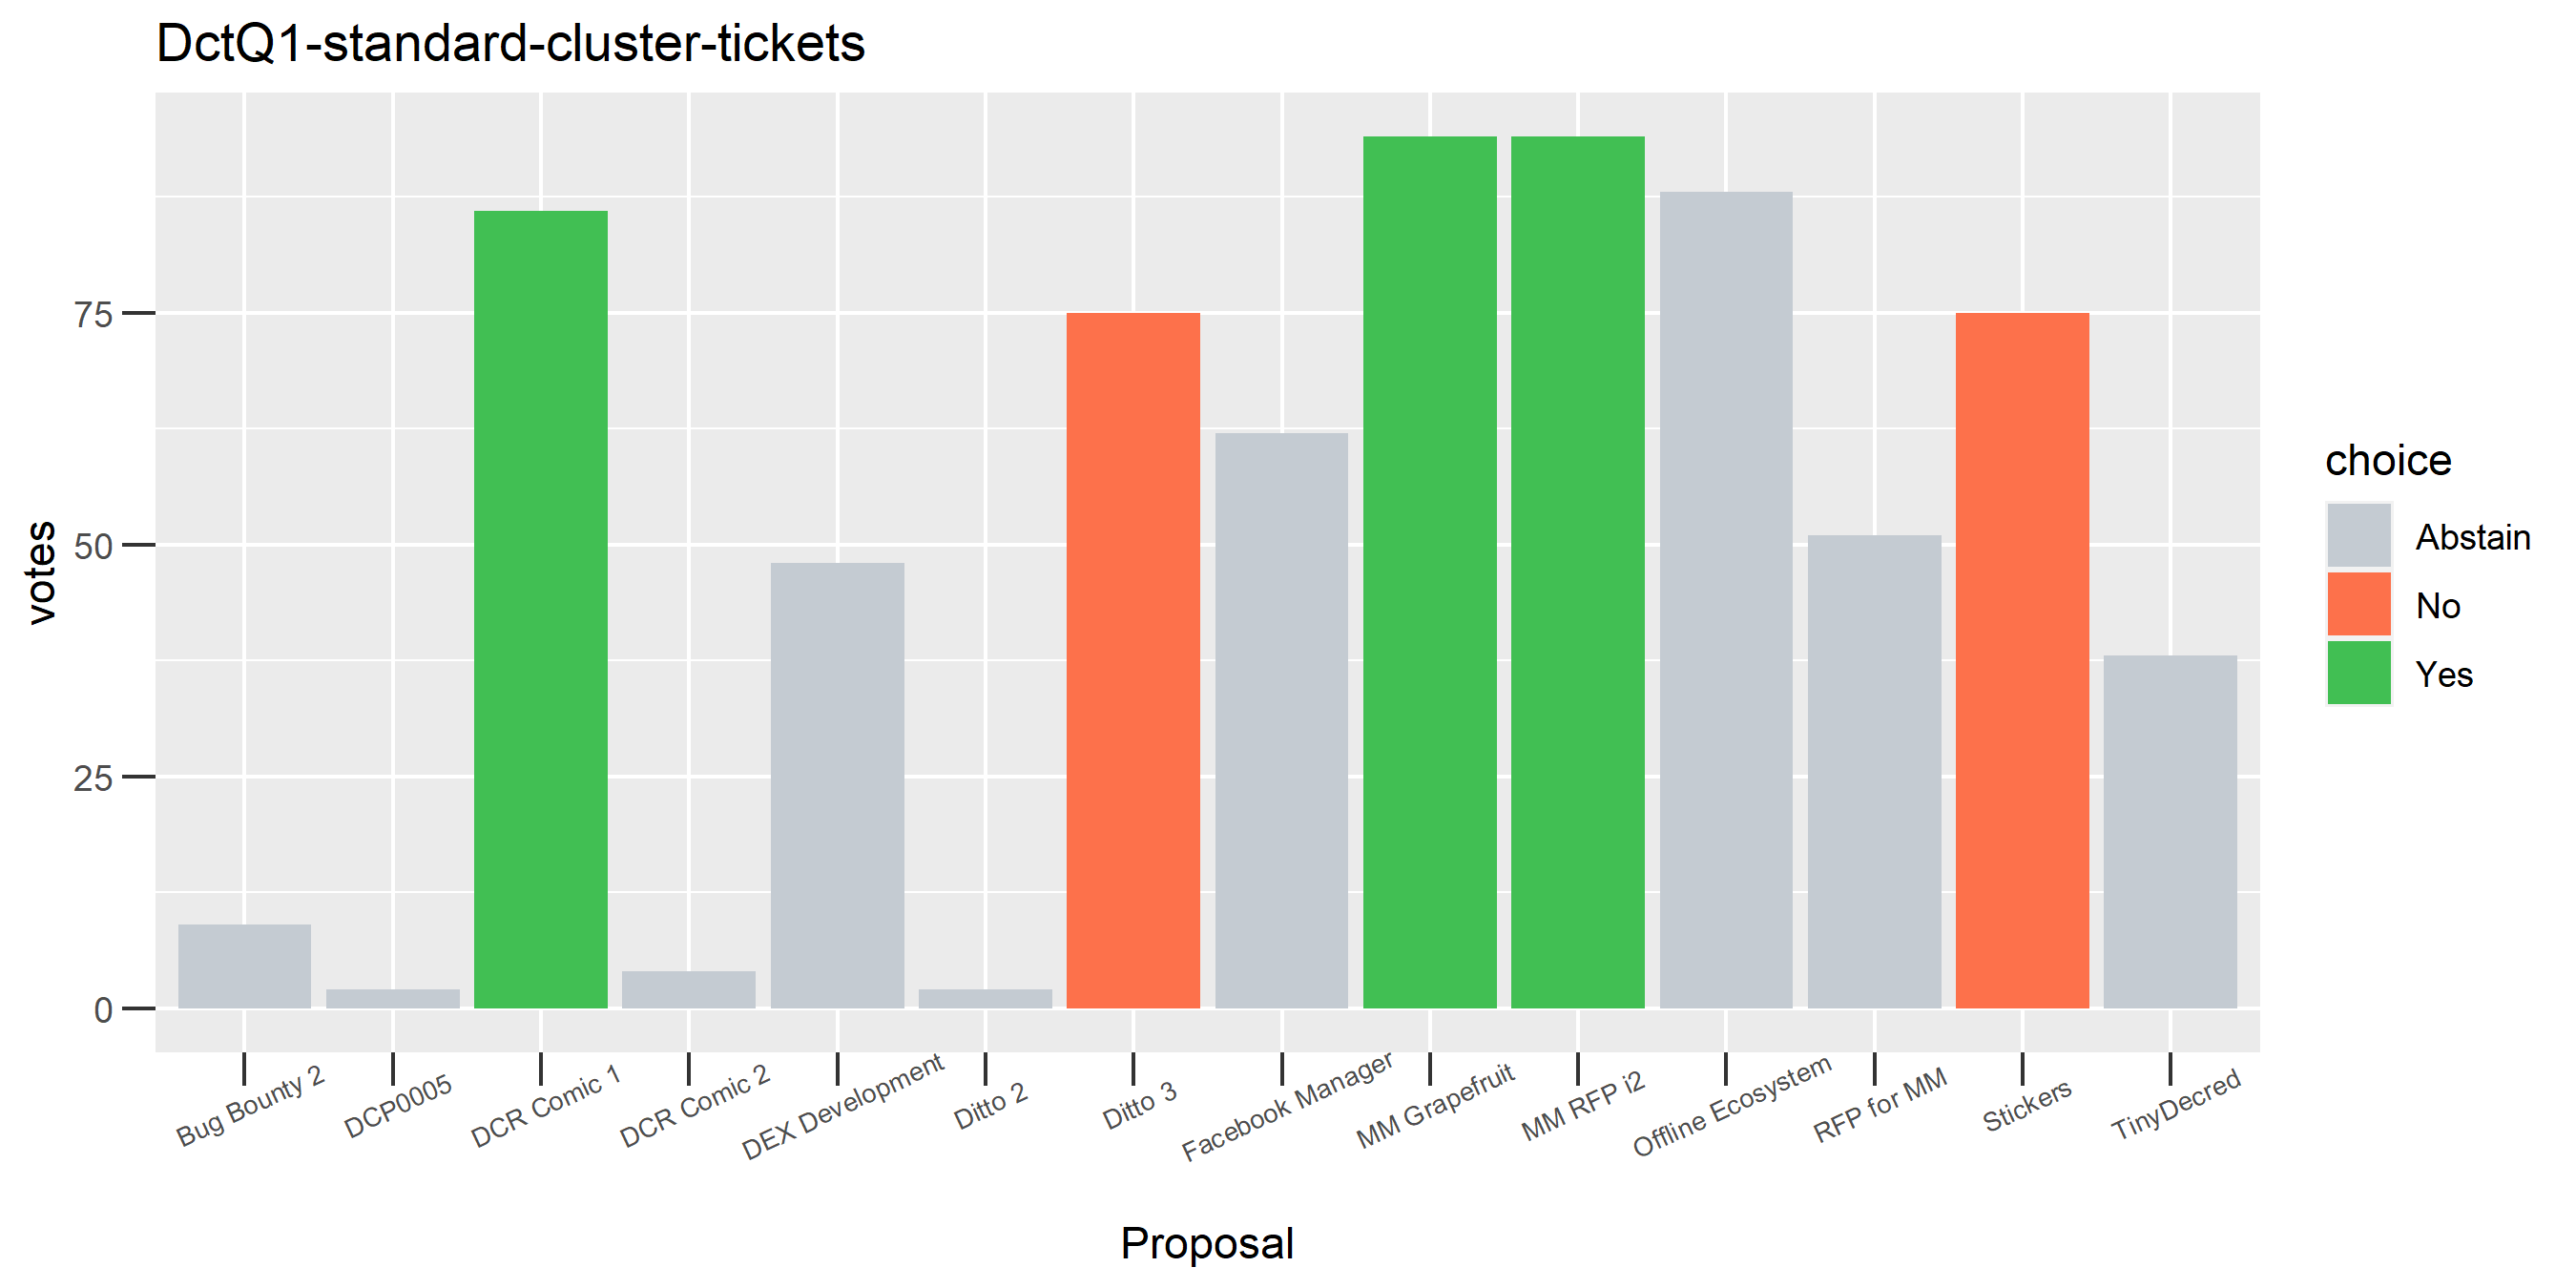 DctQ1-standard-cluster-tickets